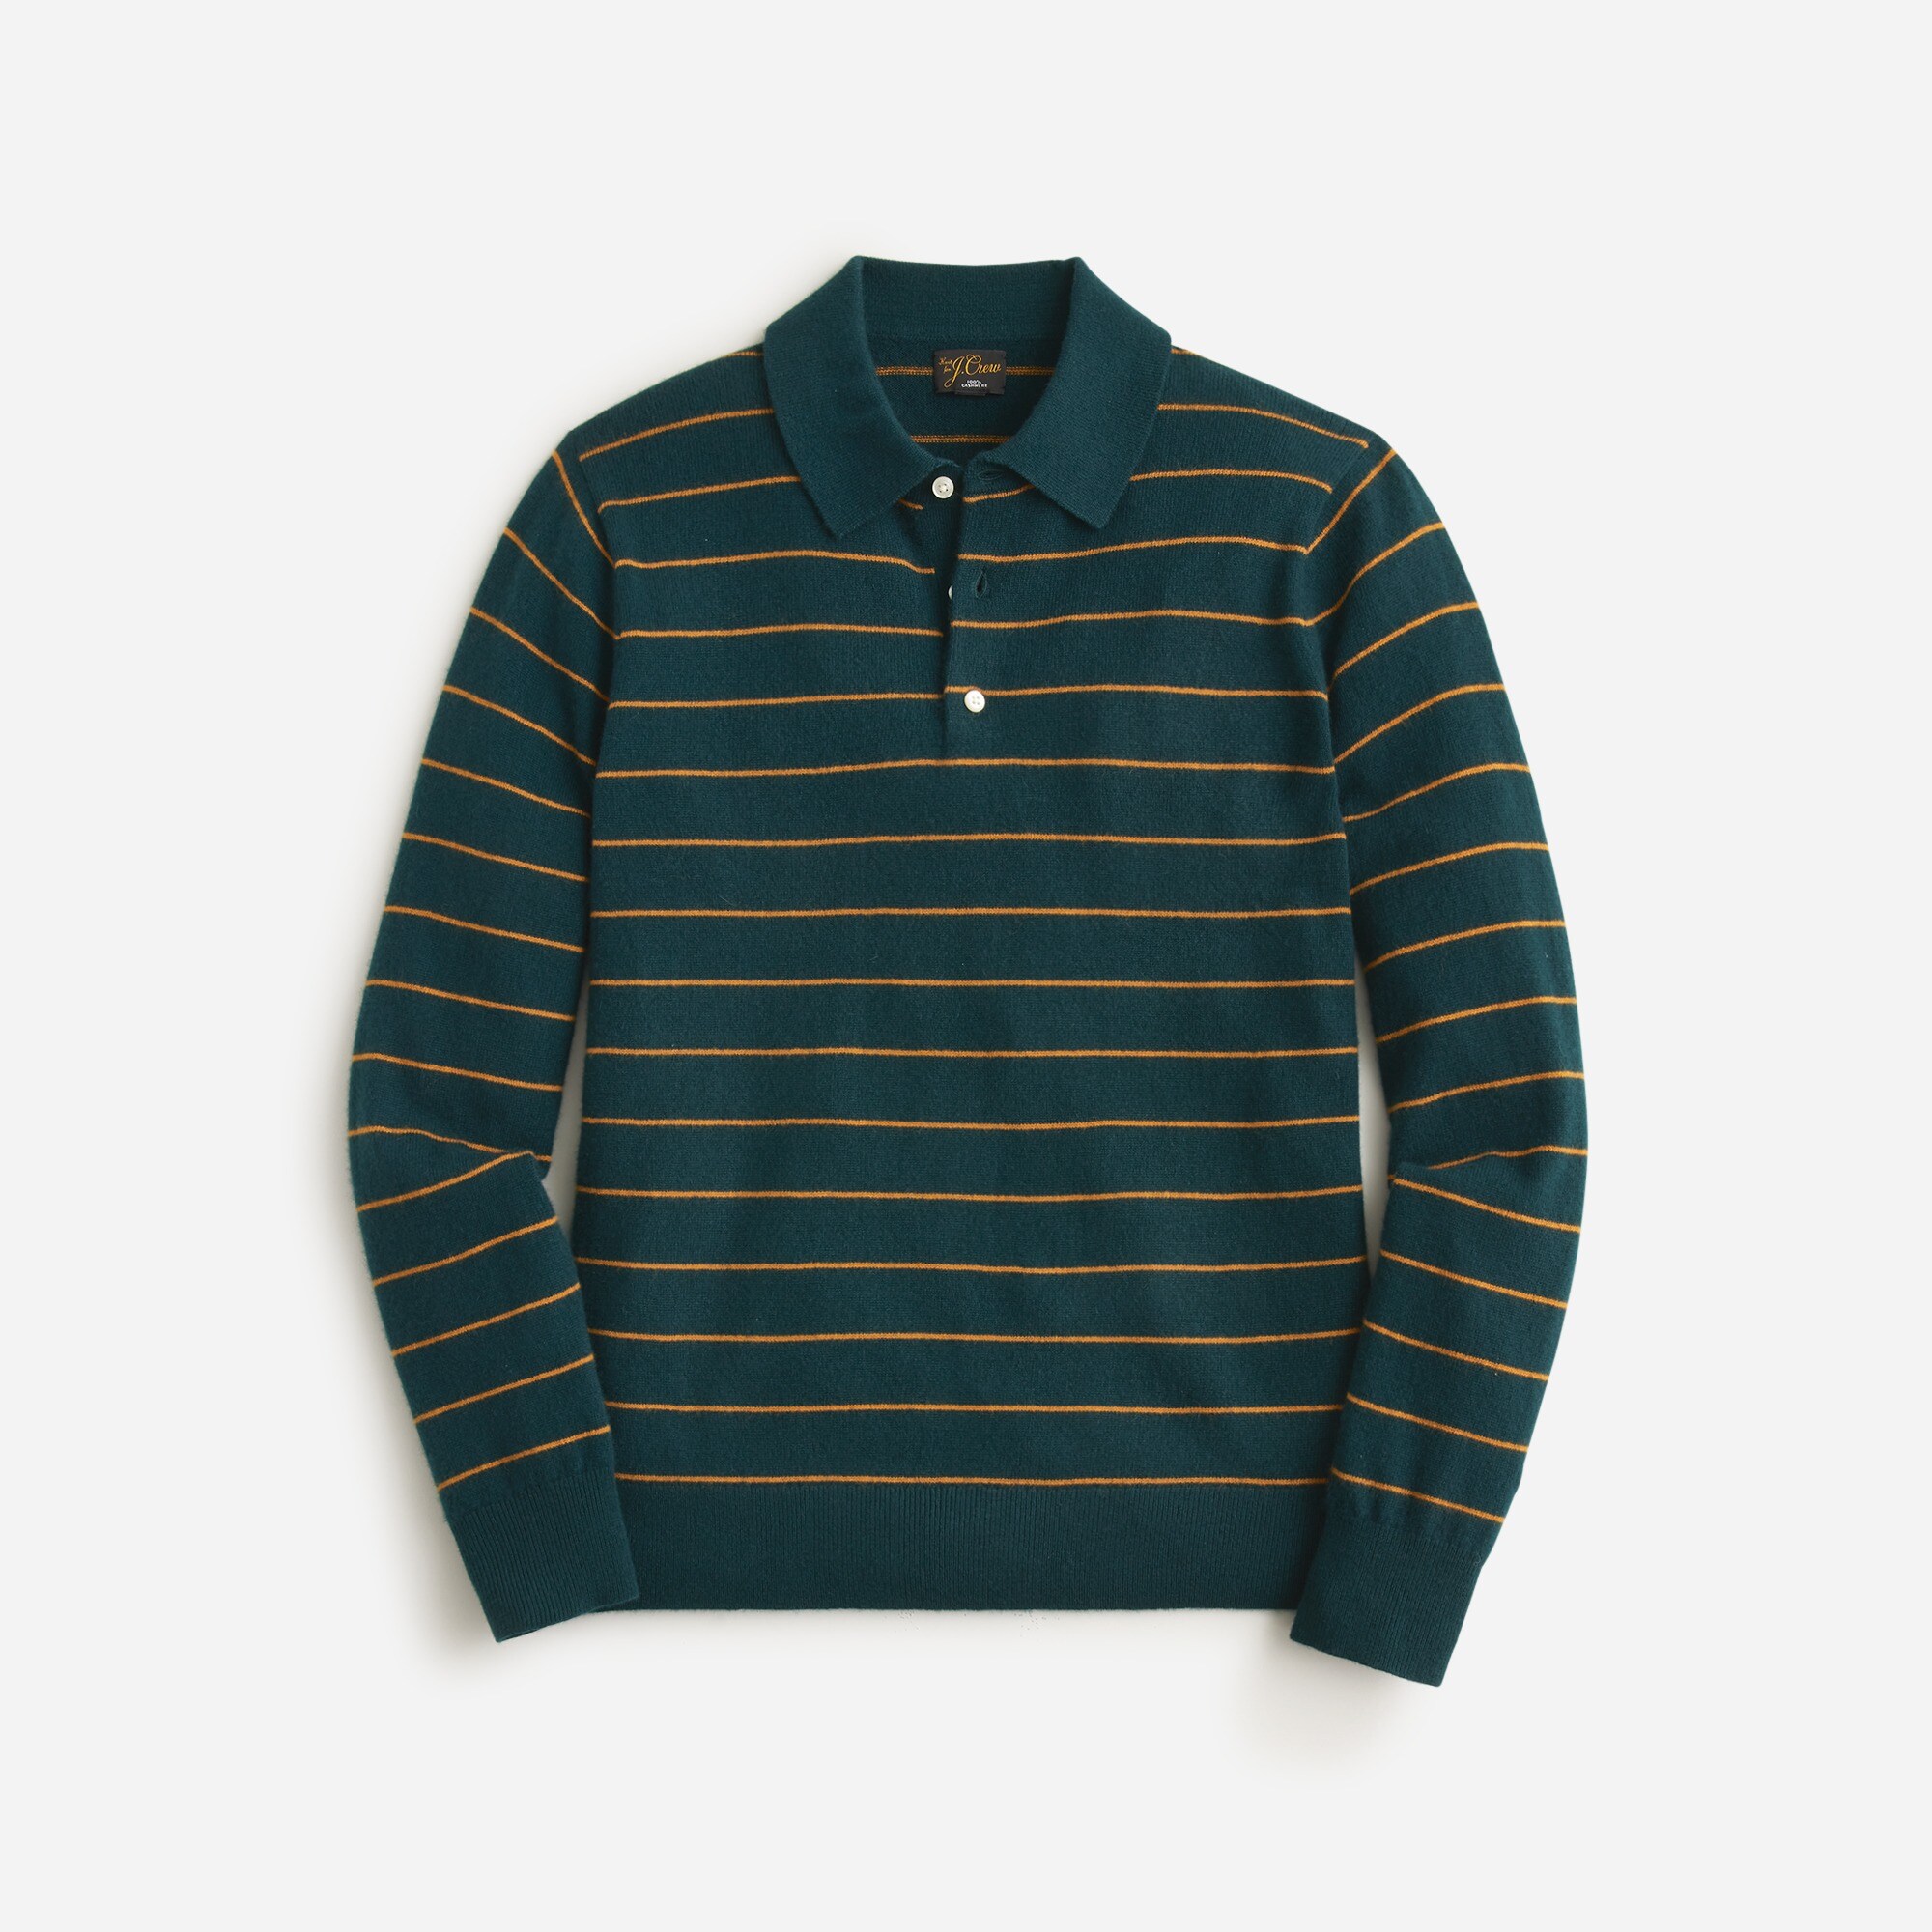 mens Cashmere collared sweater in stripe